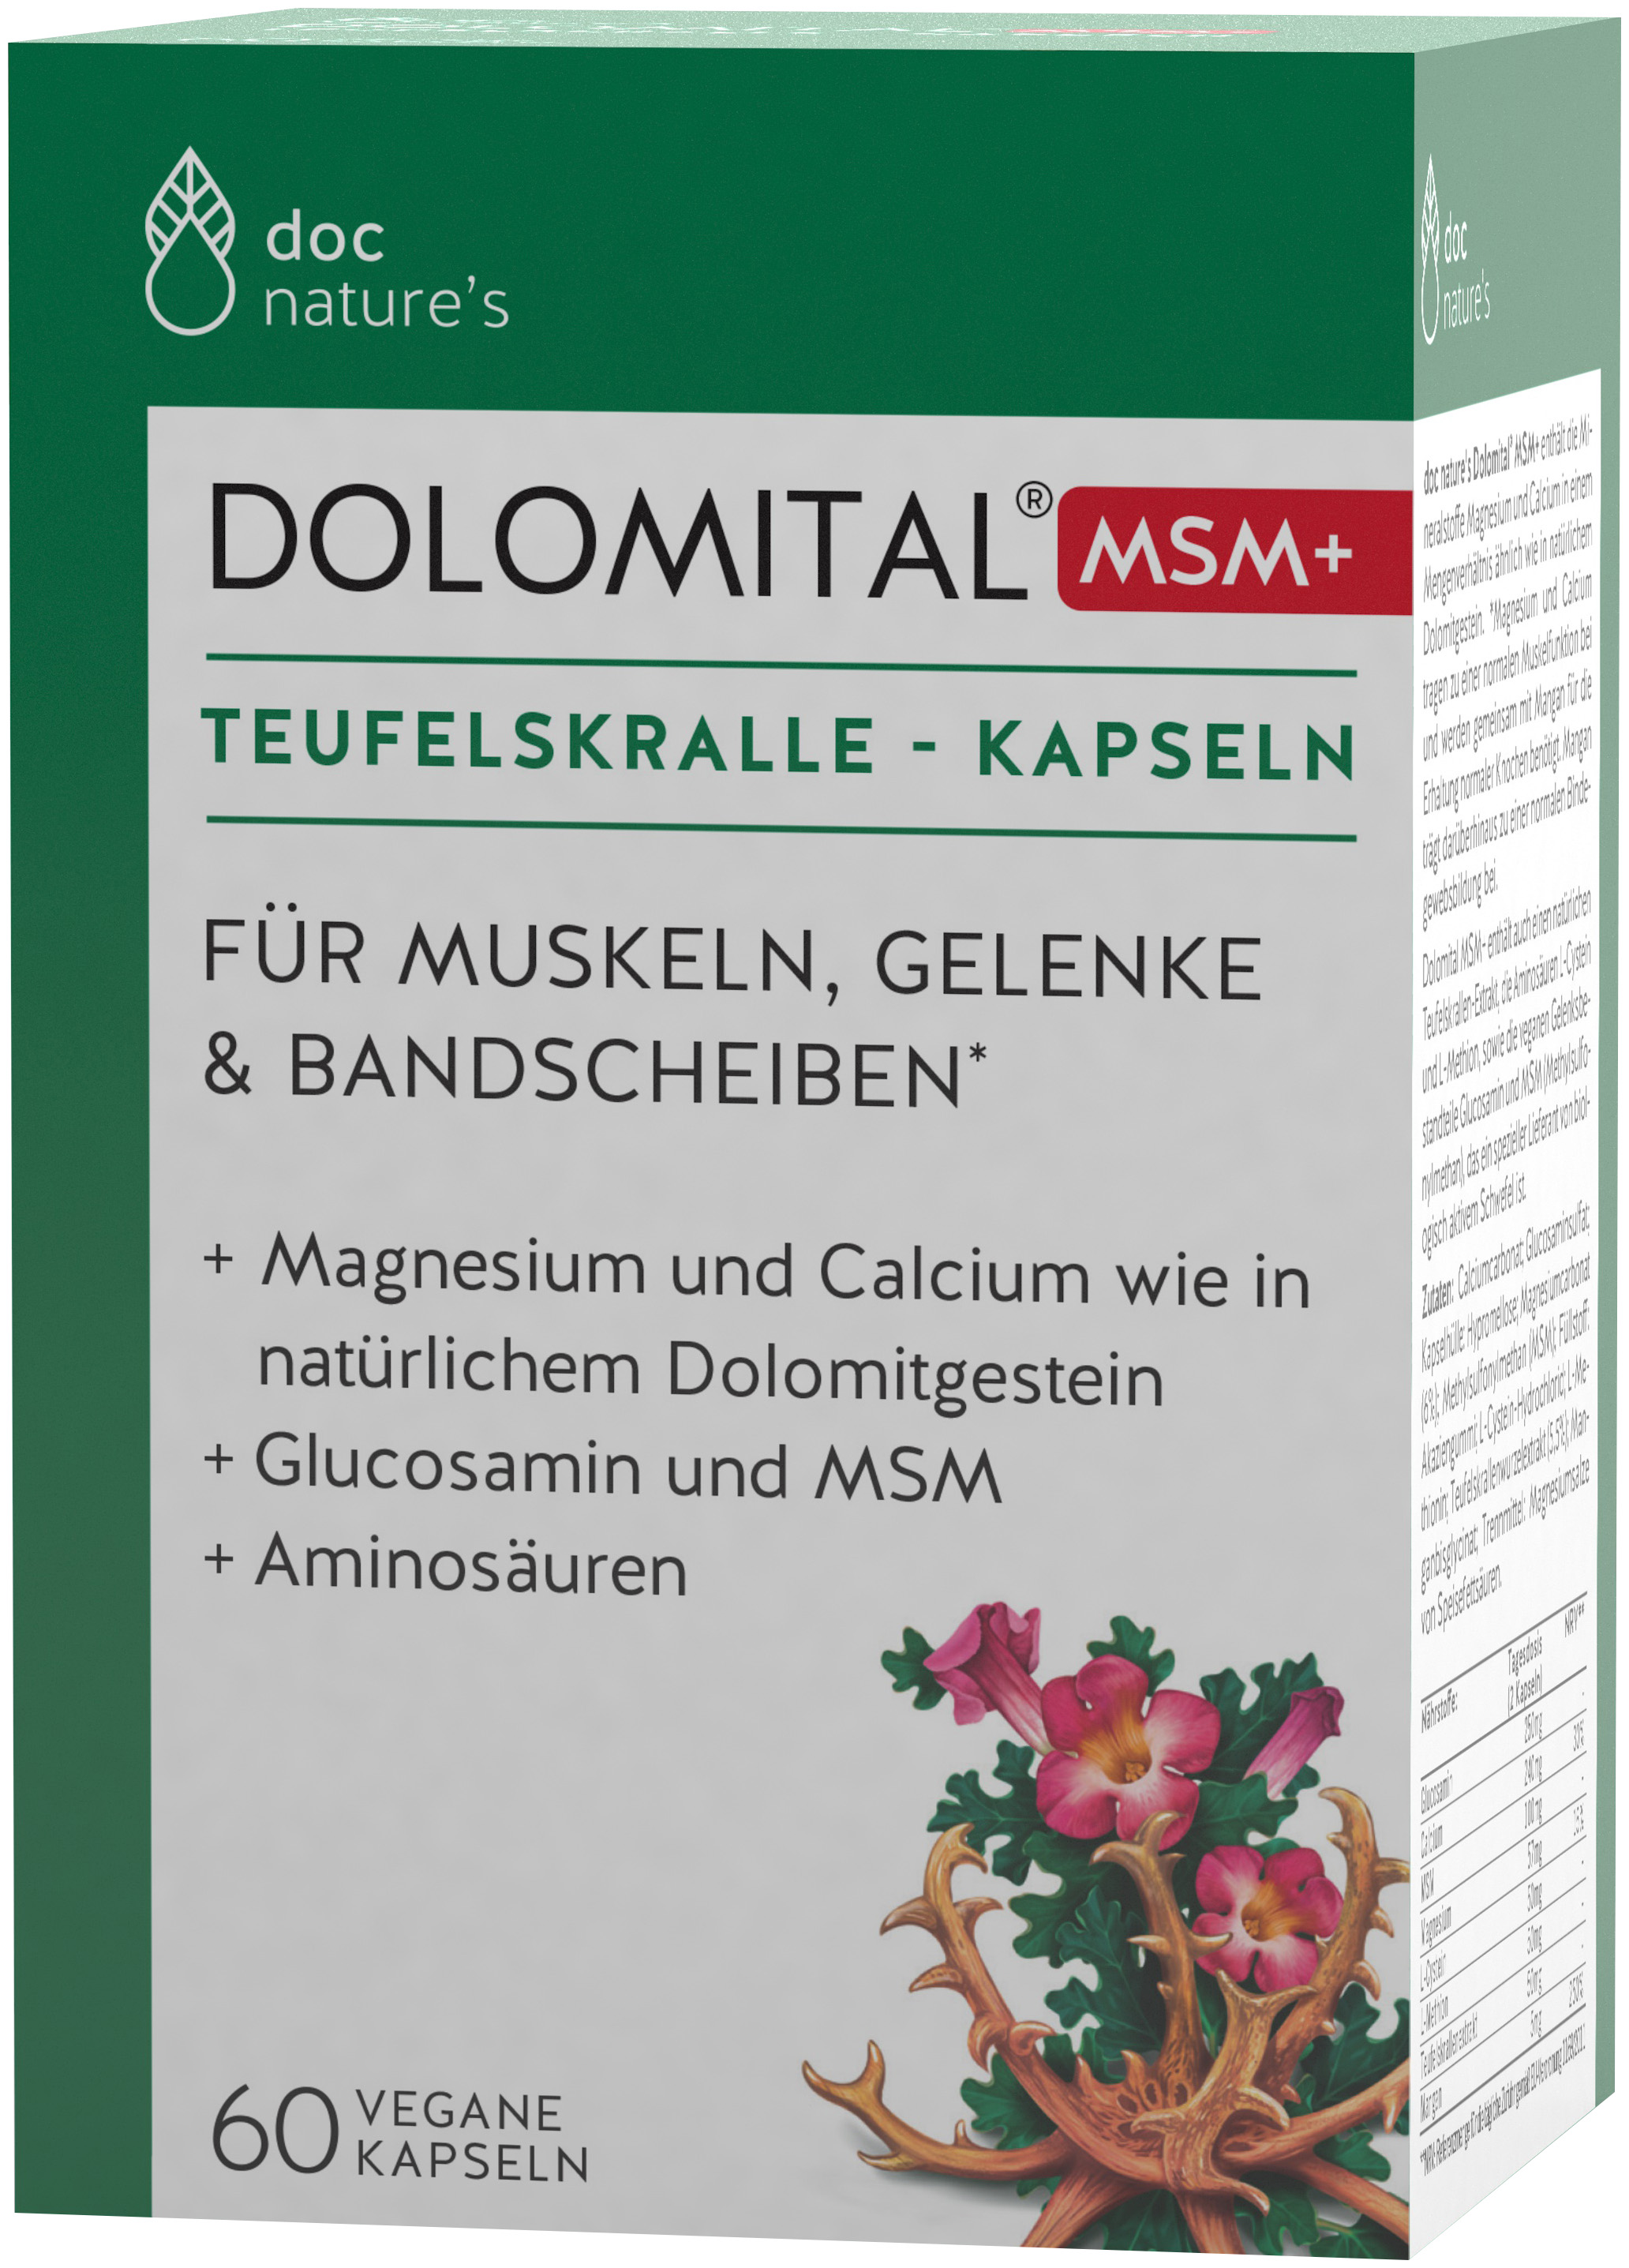 doc nature‘s DOLOMITAL® MSM+ TEUFELSKRALLE-KAPSELN